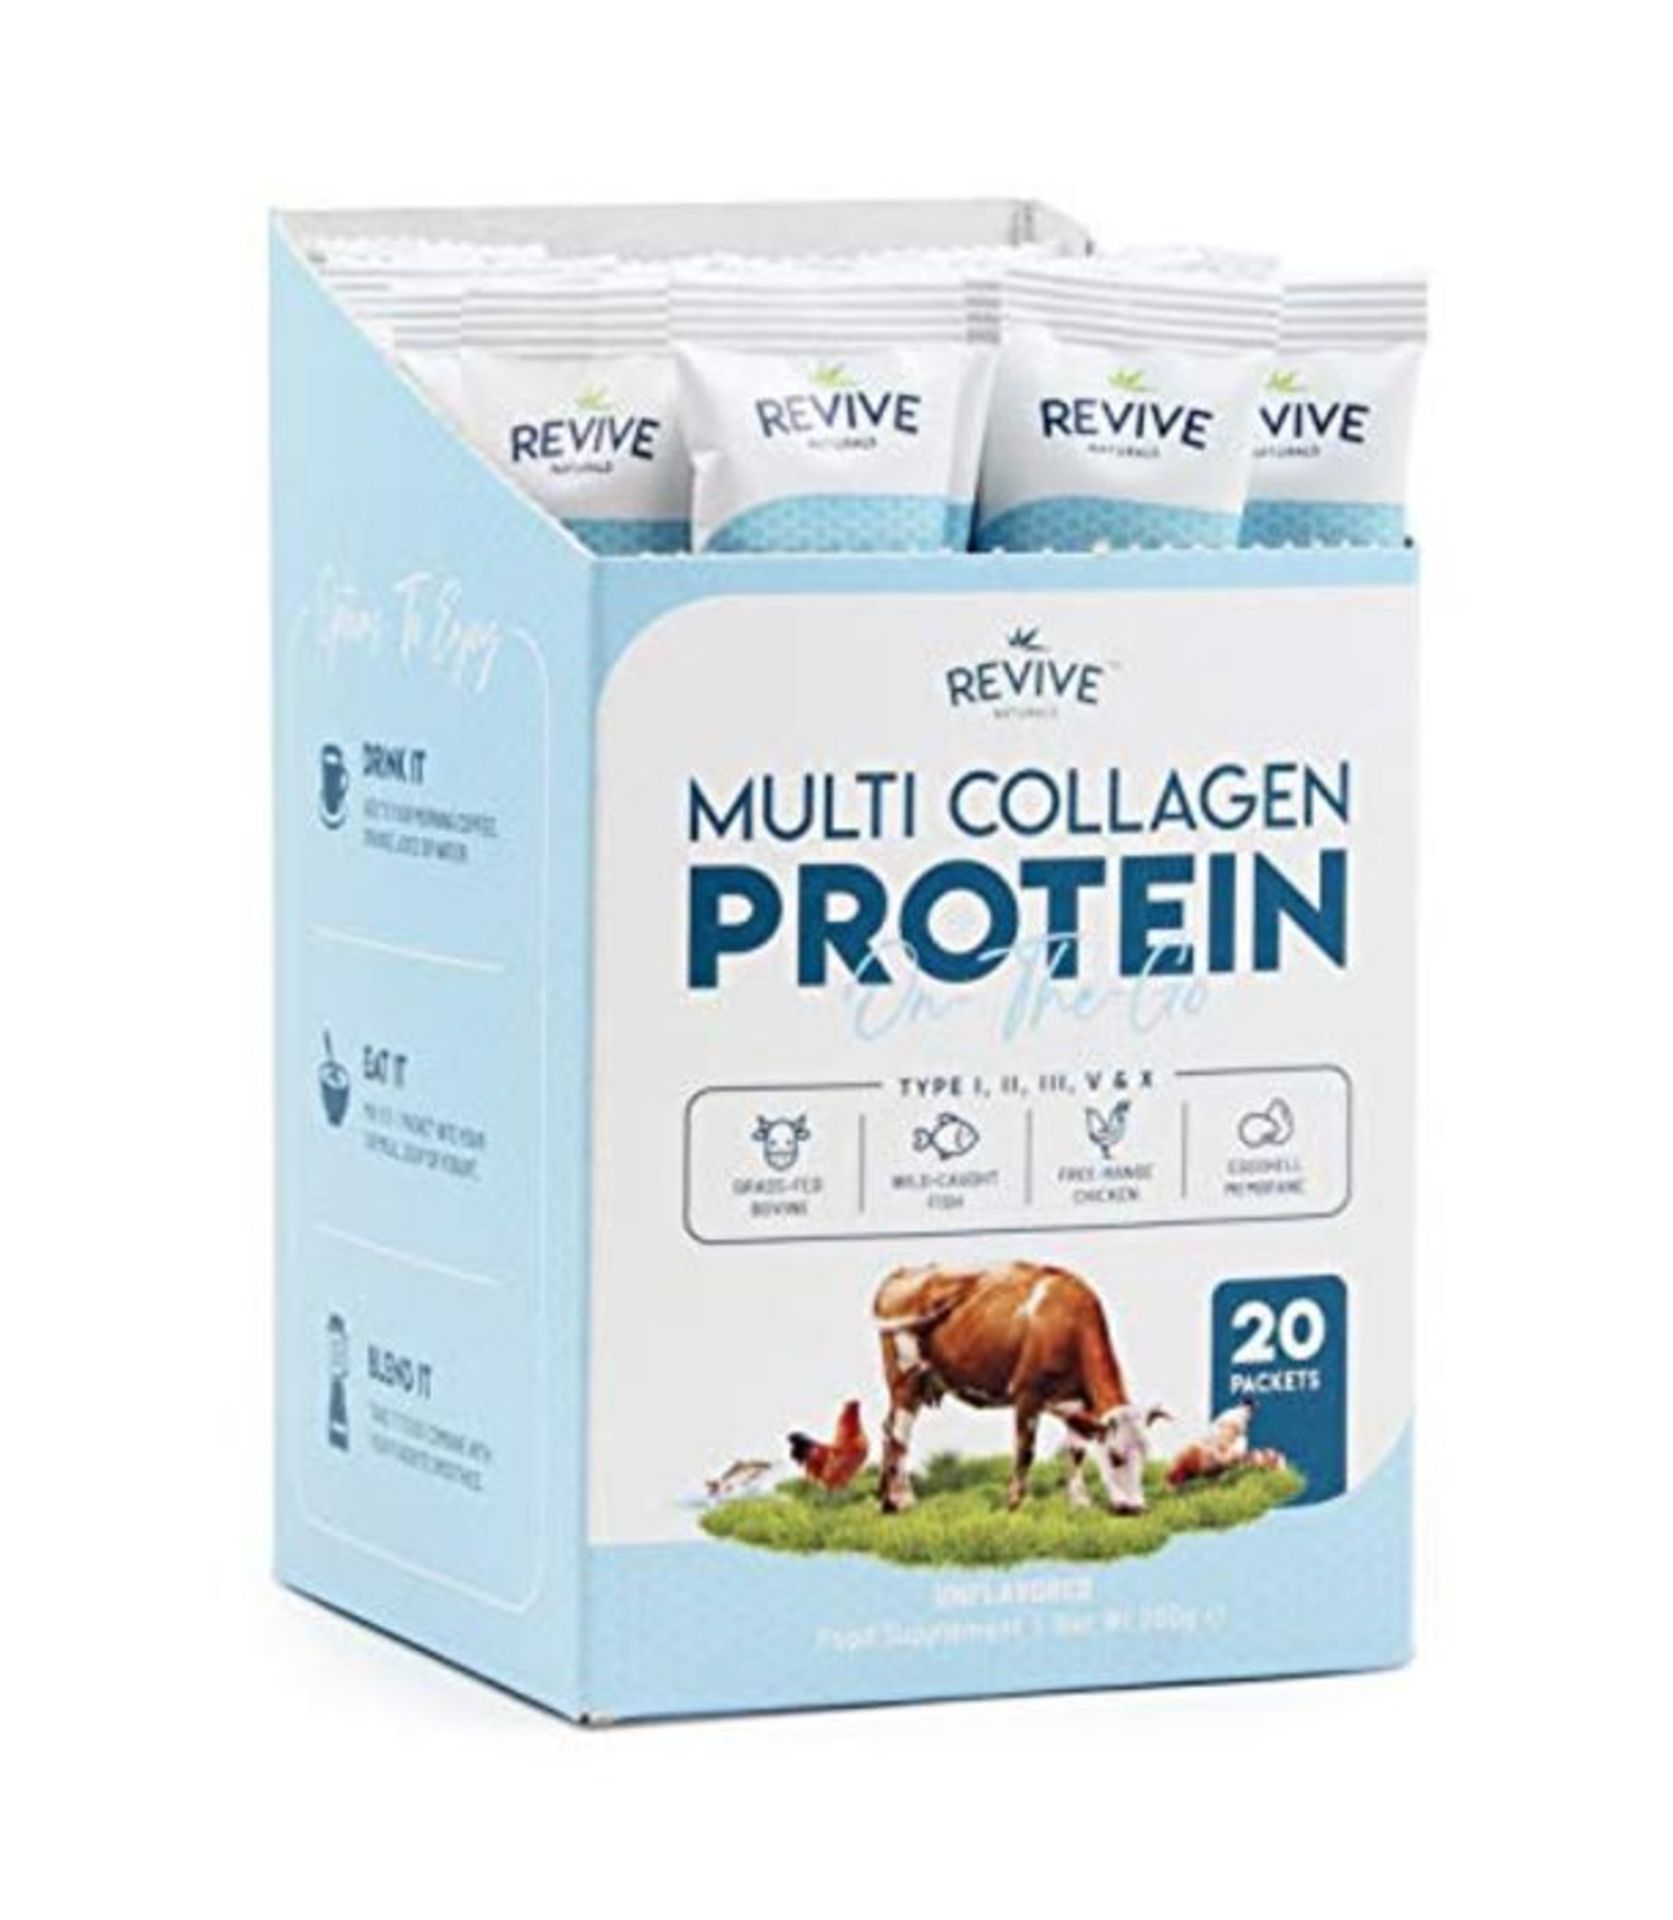 Multi Collagen Protein Powder Packets - Types I, II, III, V & X - Hydrolyzed Grass Fed